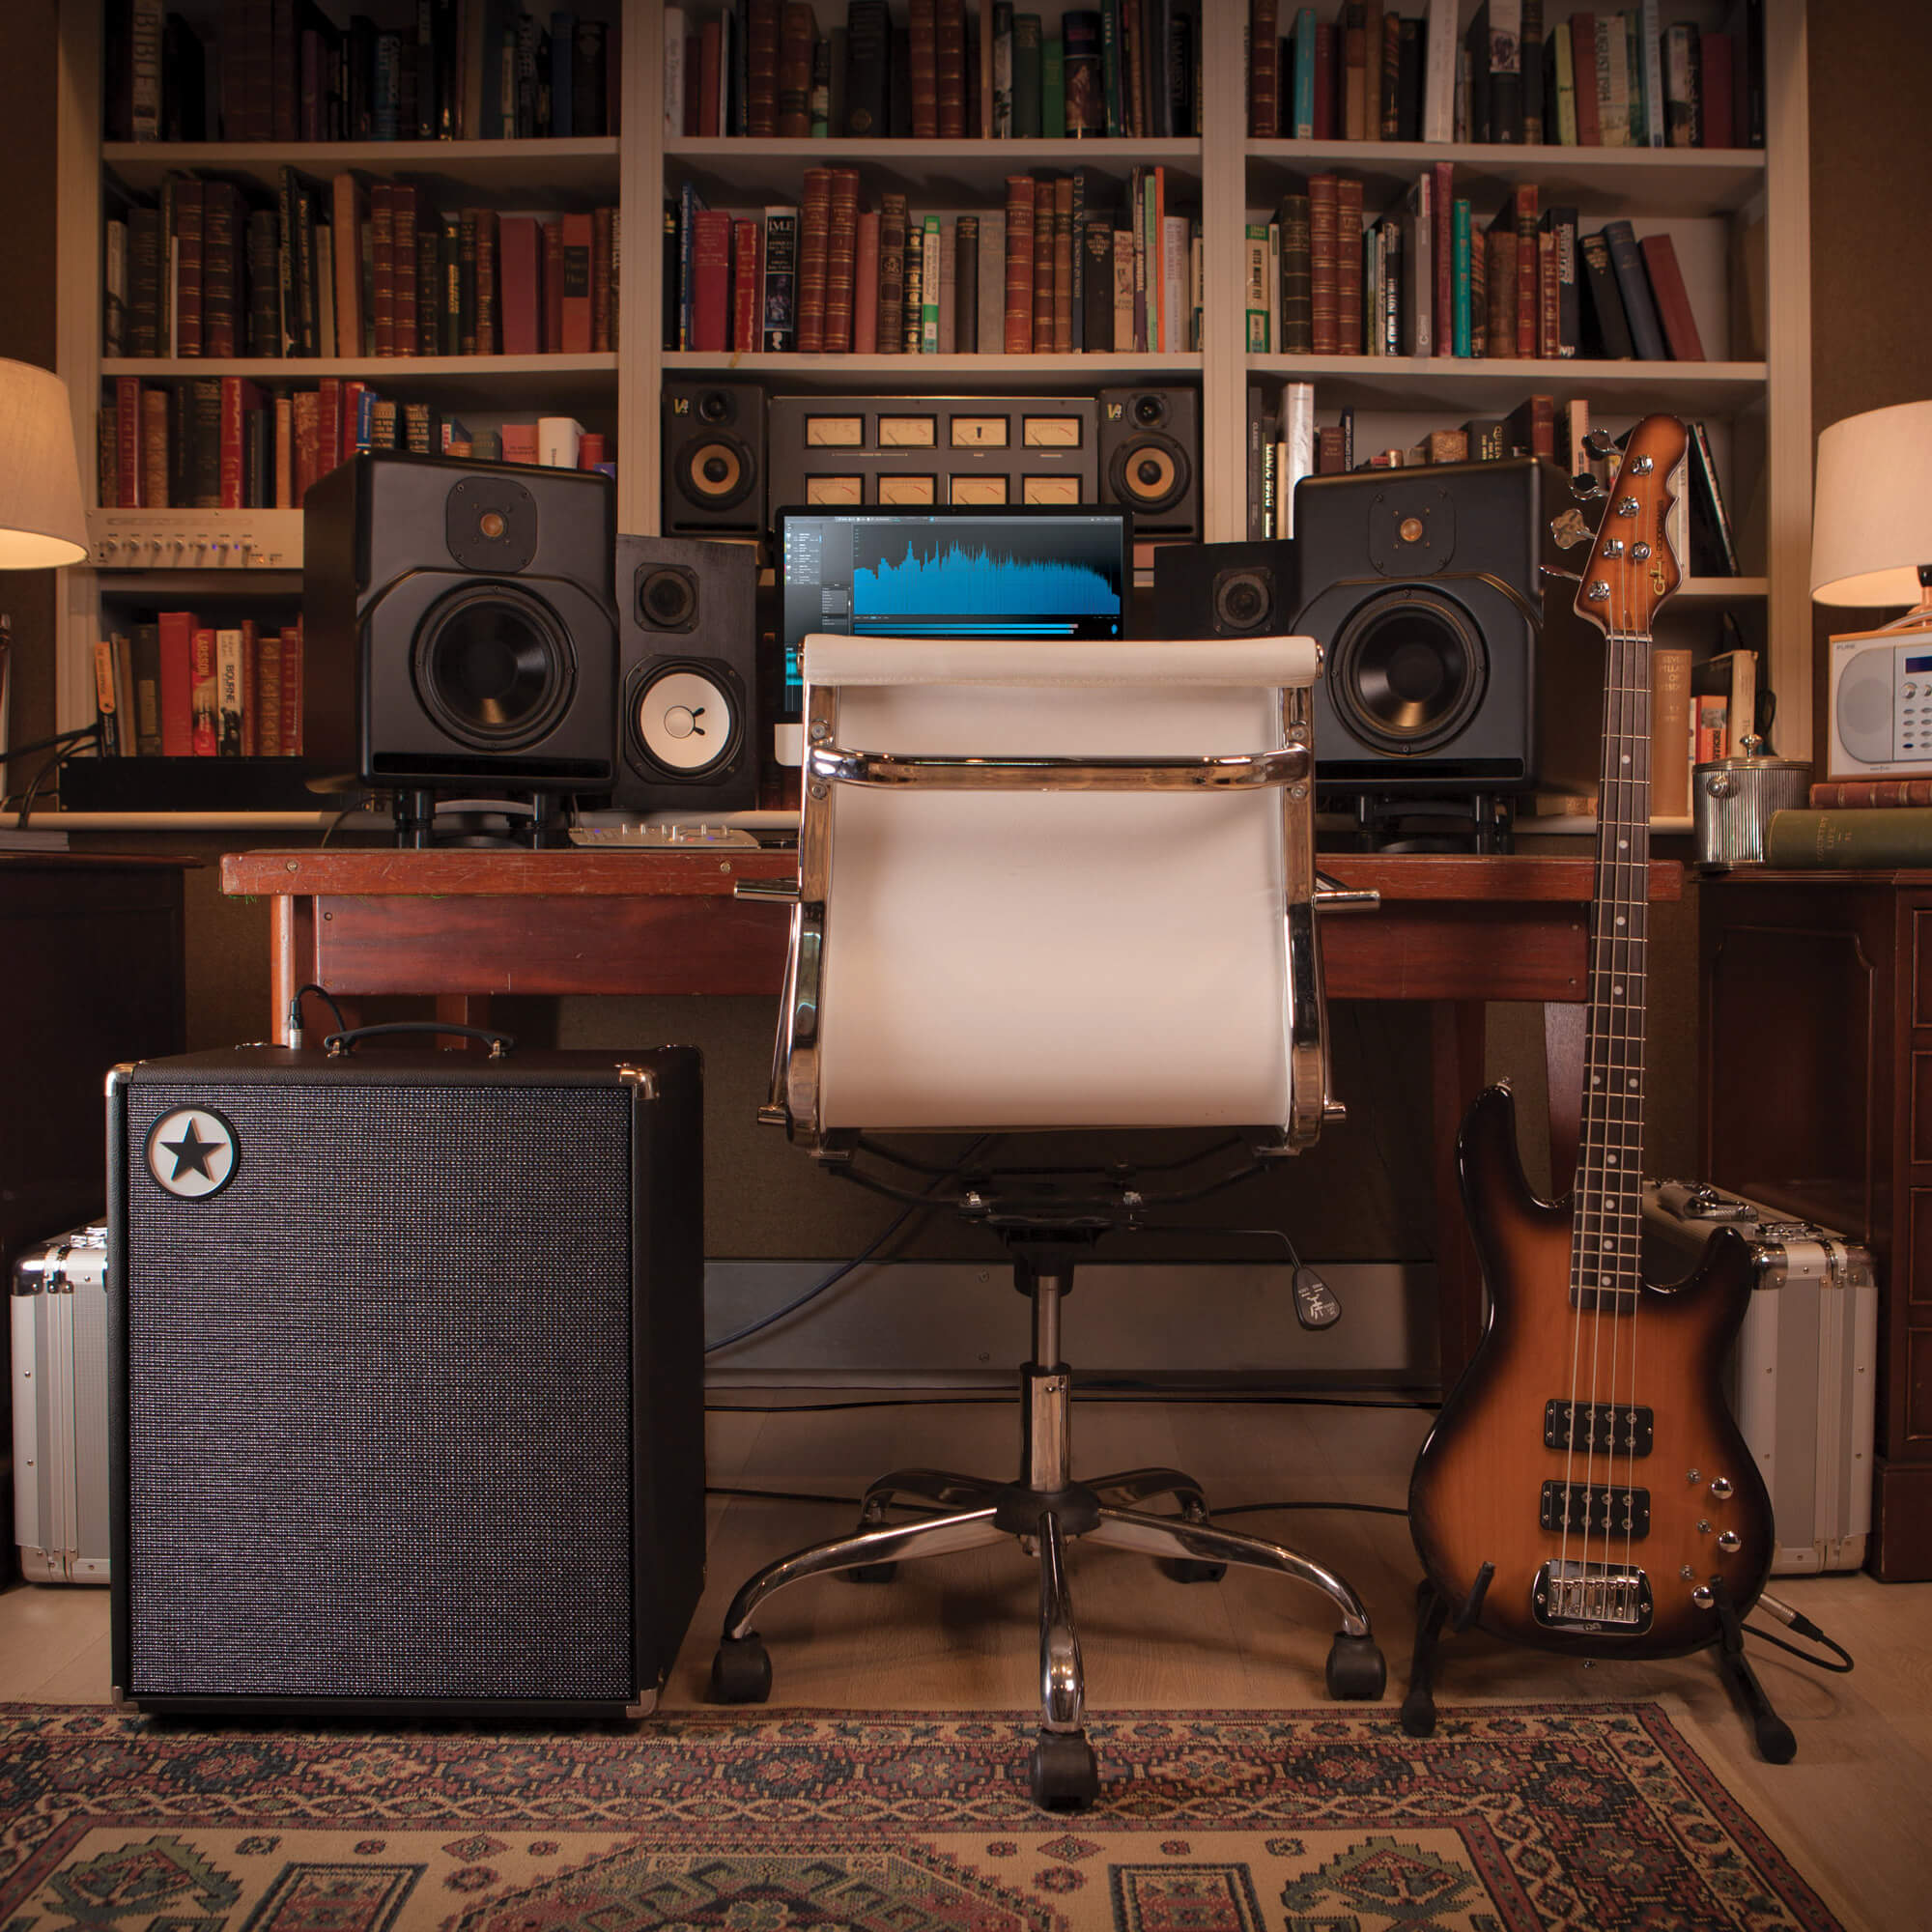 Blackstar Unity 120 bass amplifier cabinet in home recording studio